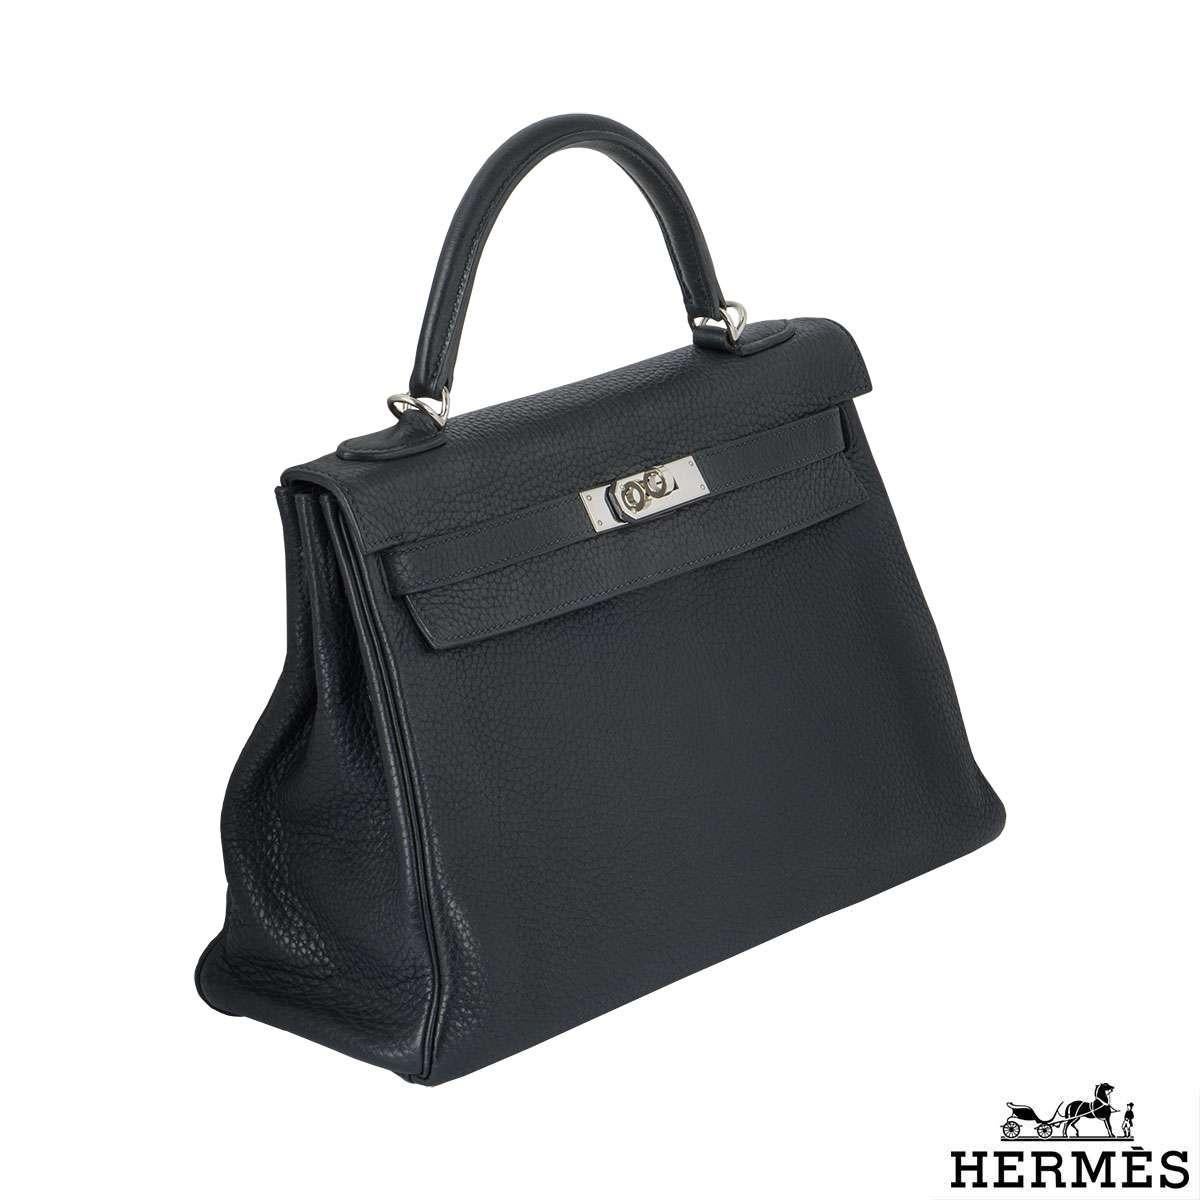 Black Hermes 32 cm Kelly handbag with original Fendi Strap